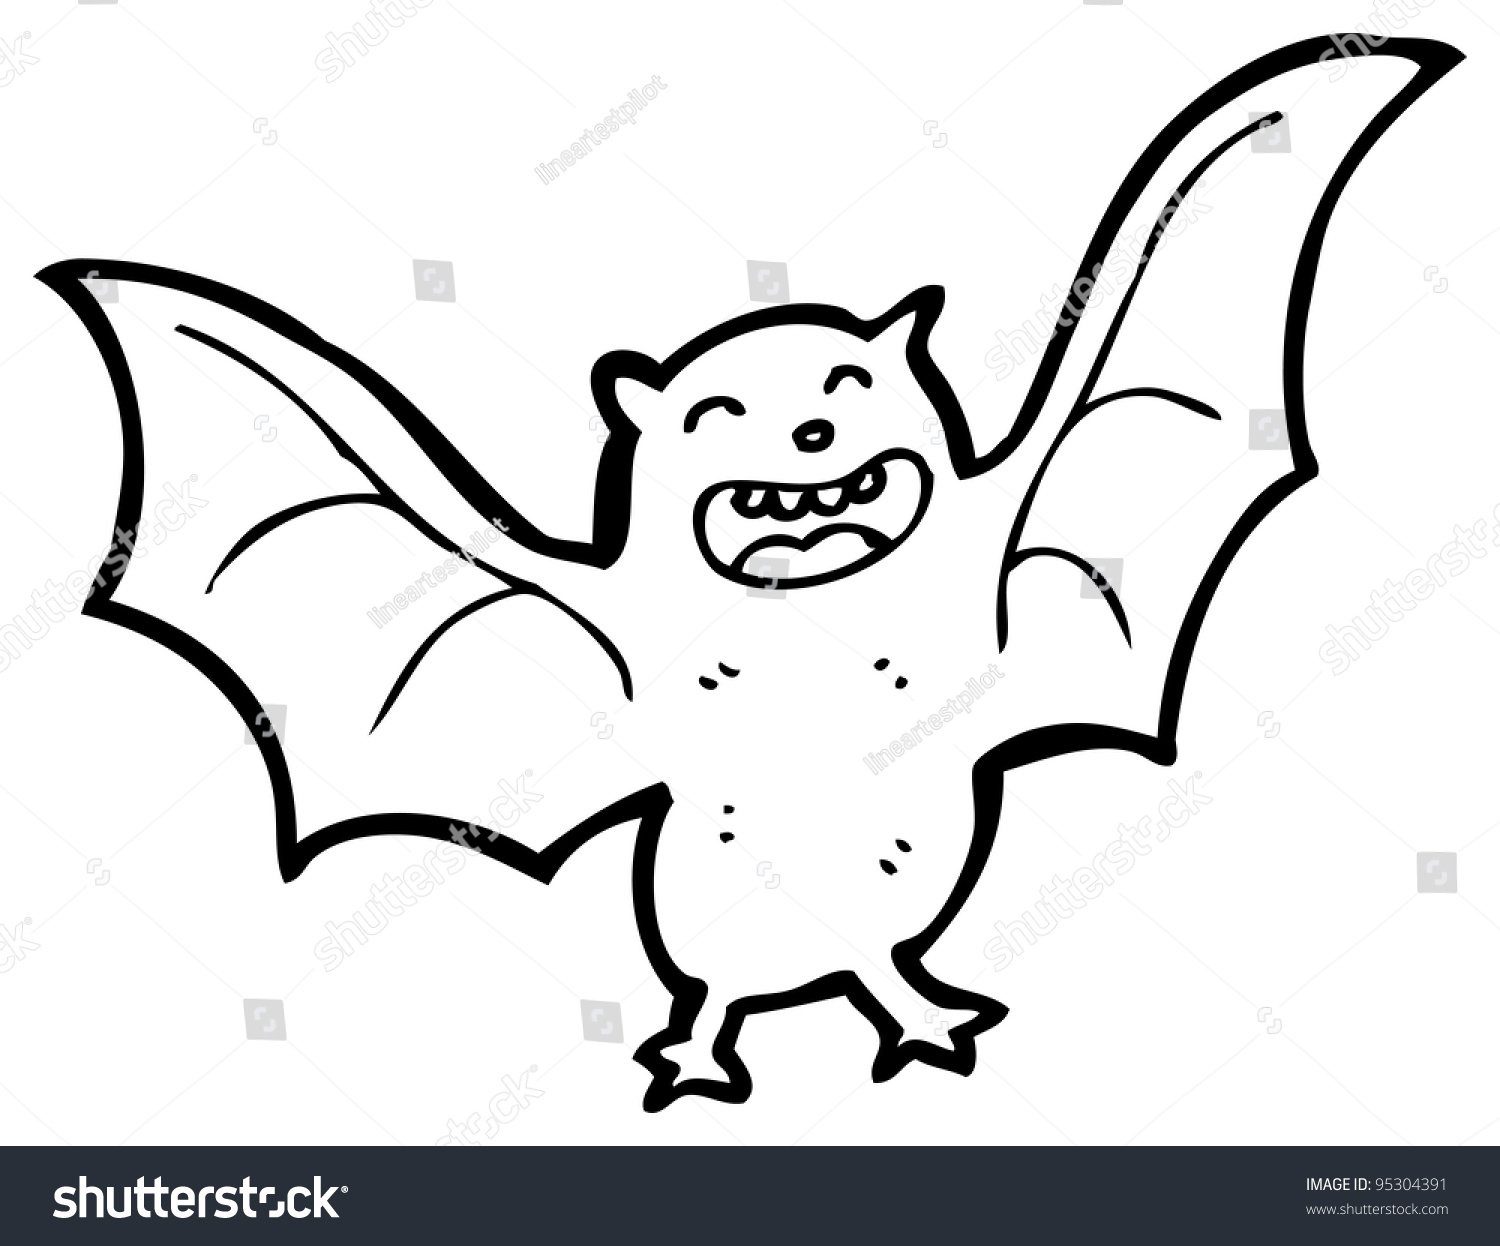 Halloween Bat Cartoon Stock Photo 95304391 : Shutterstock